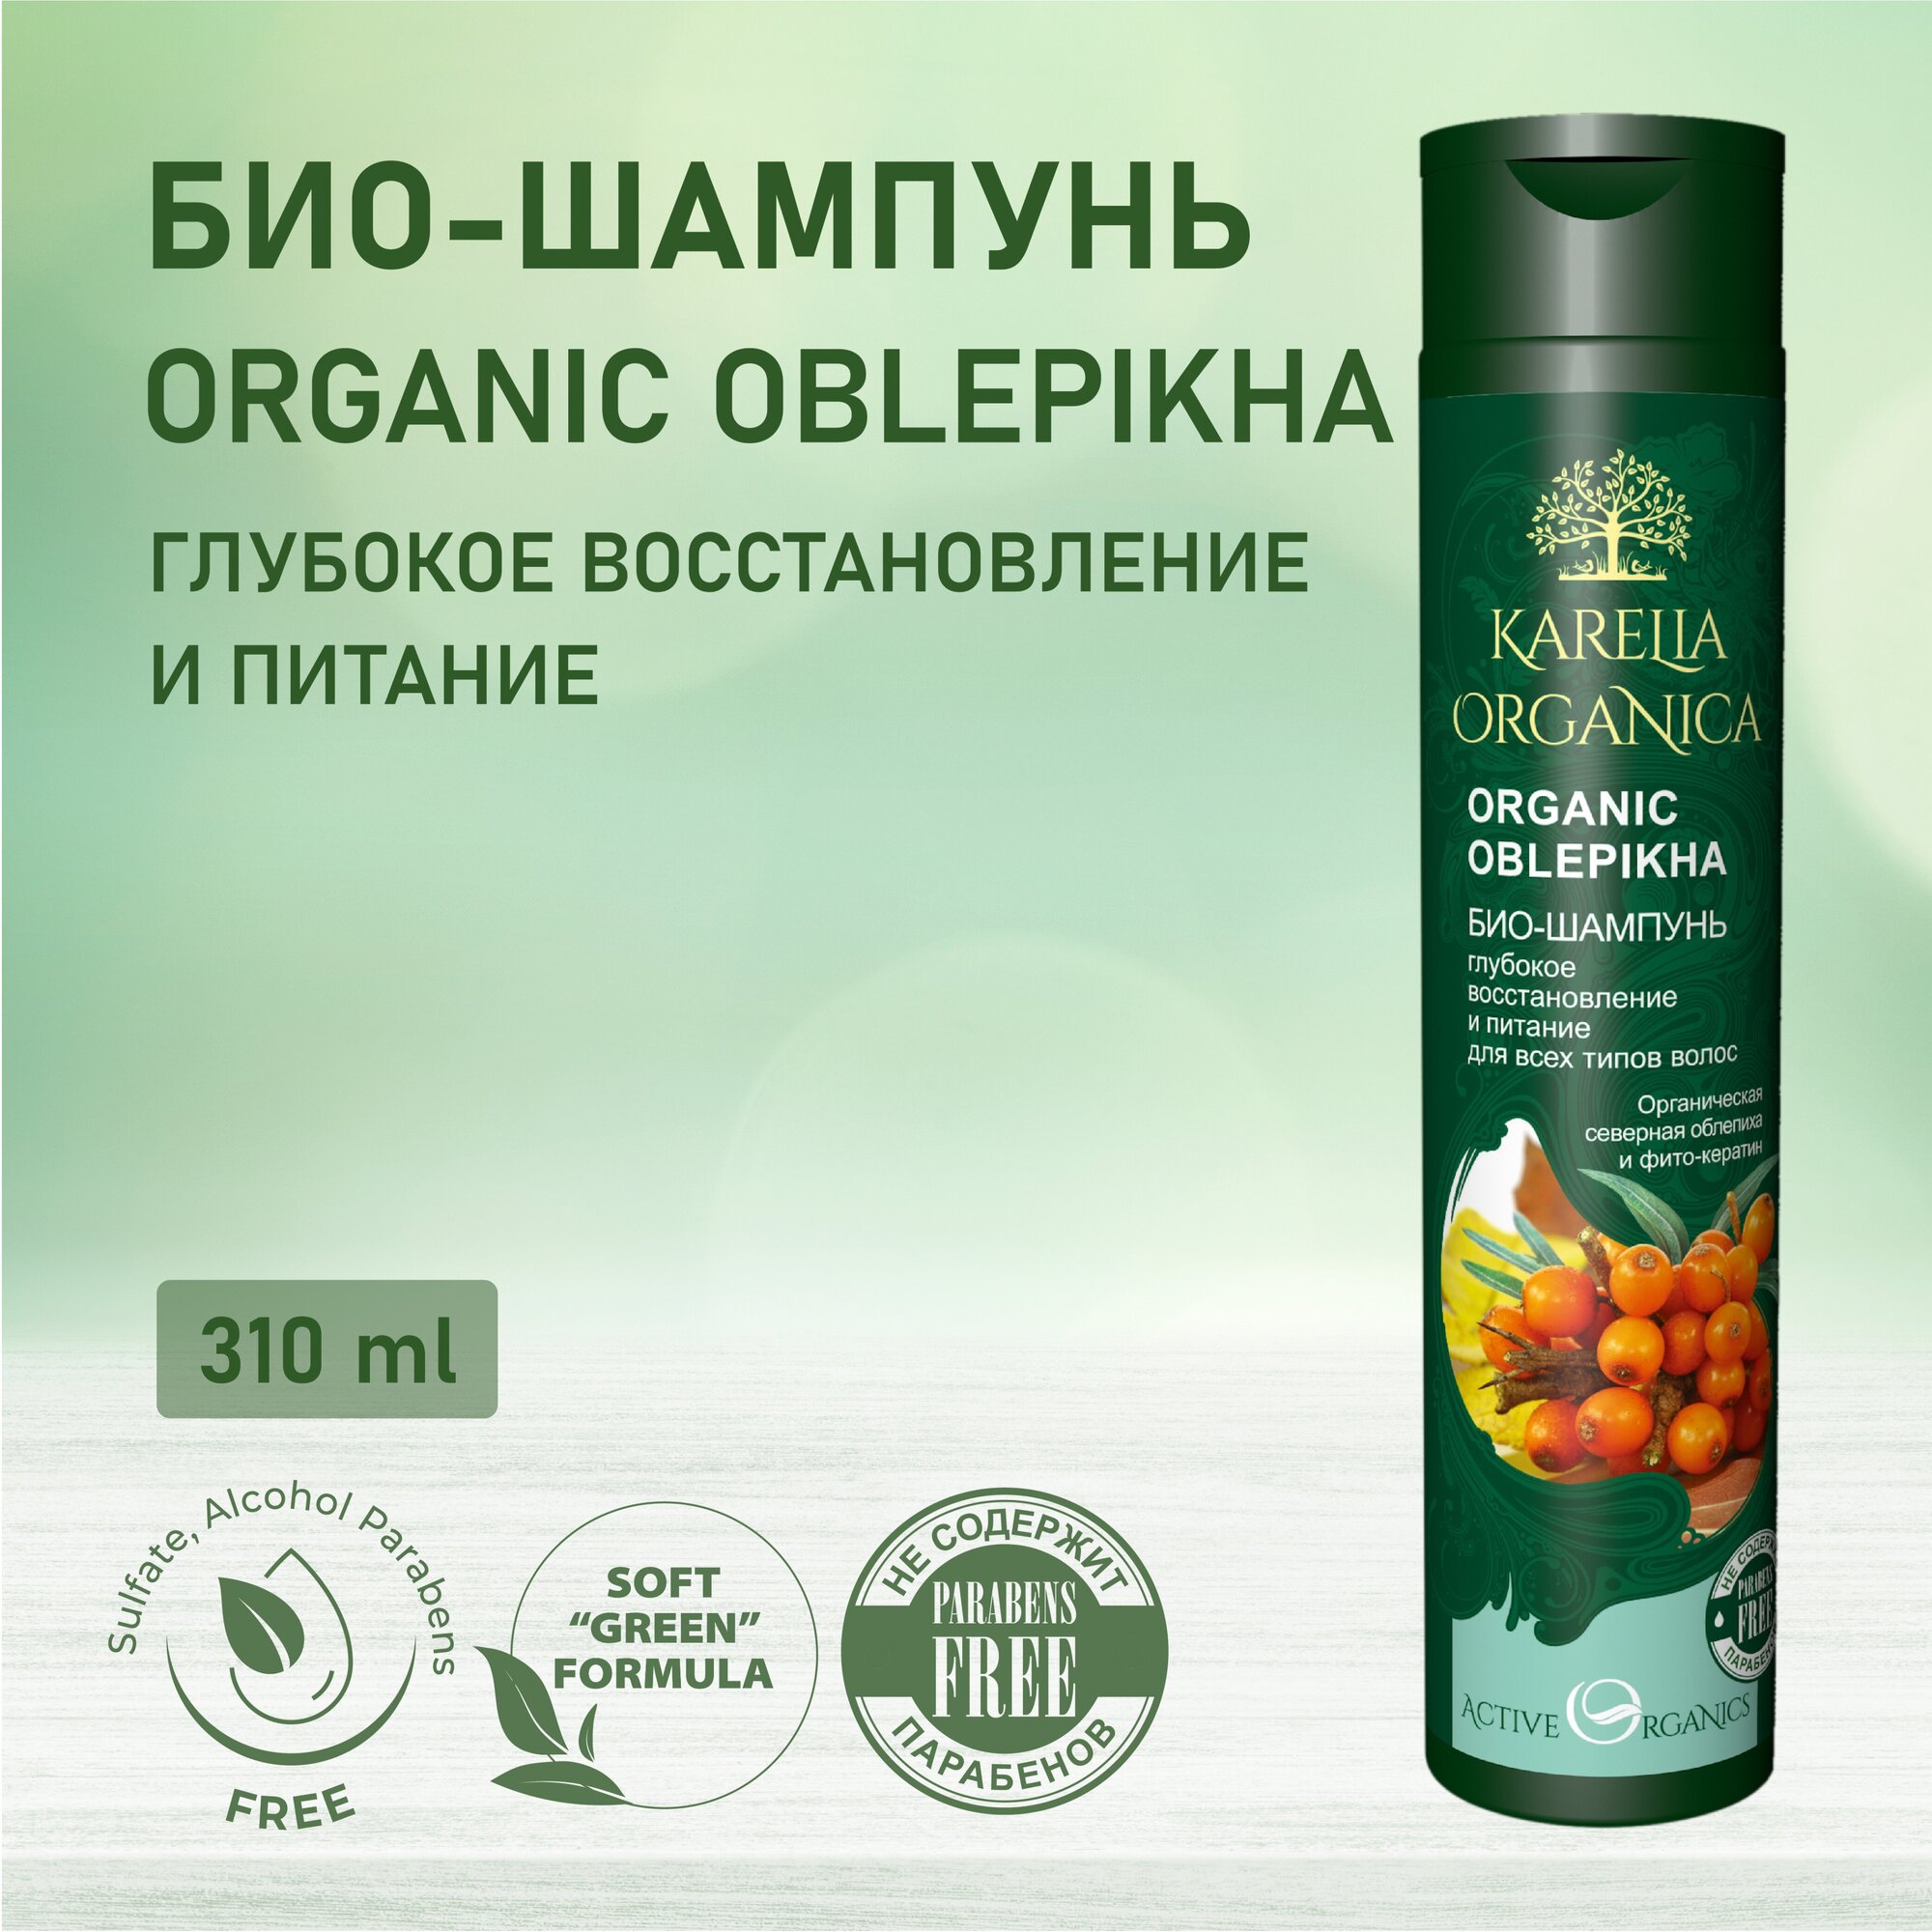 KARELIA ORGANICA Био-Шампунь "Organic OBLEPIKHA" Глубокое восстановление и питание, 310мл